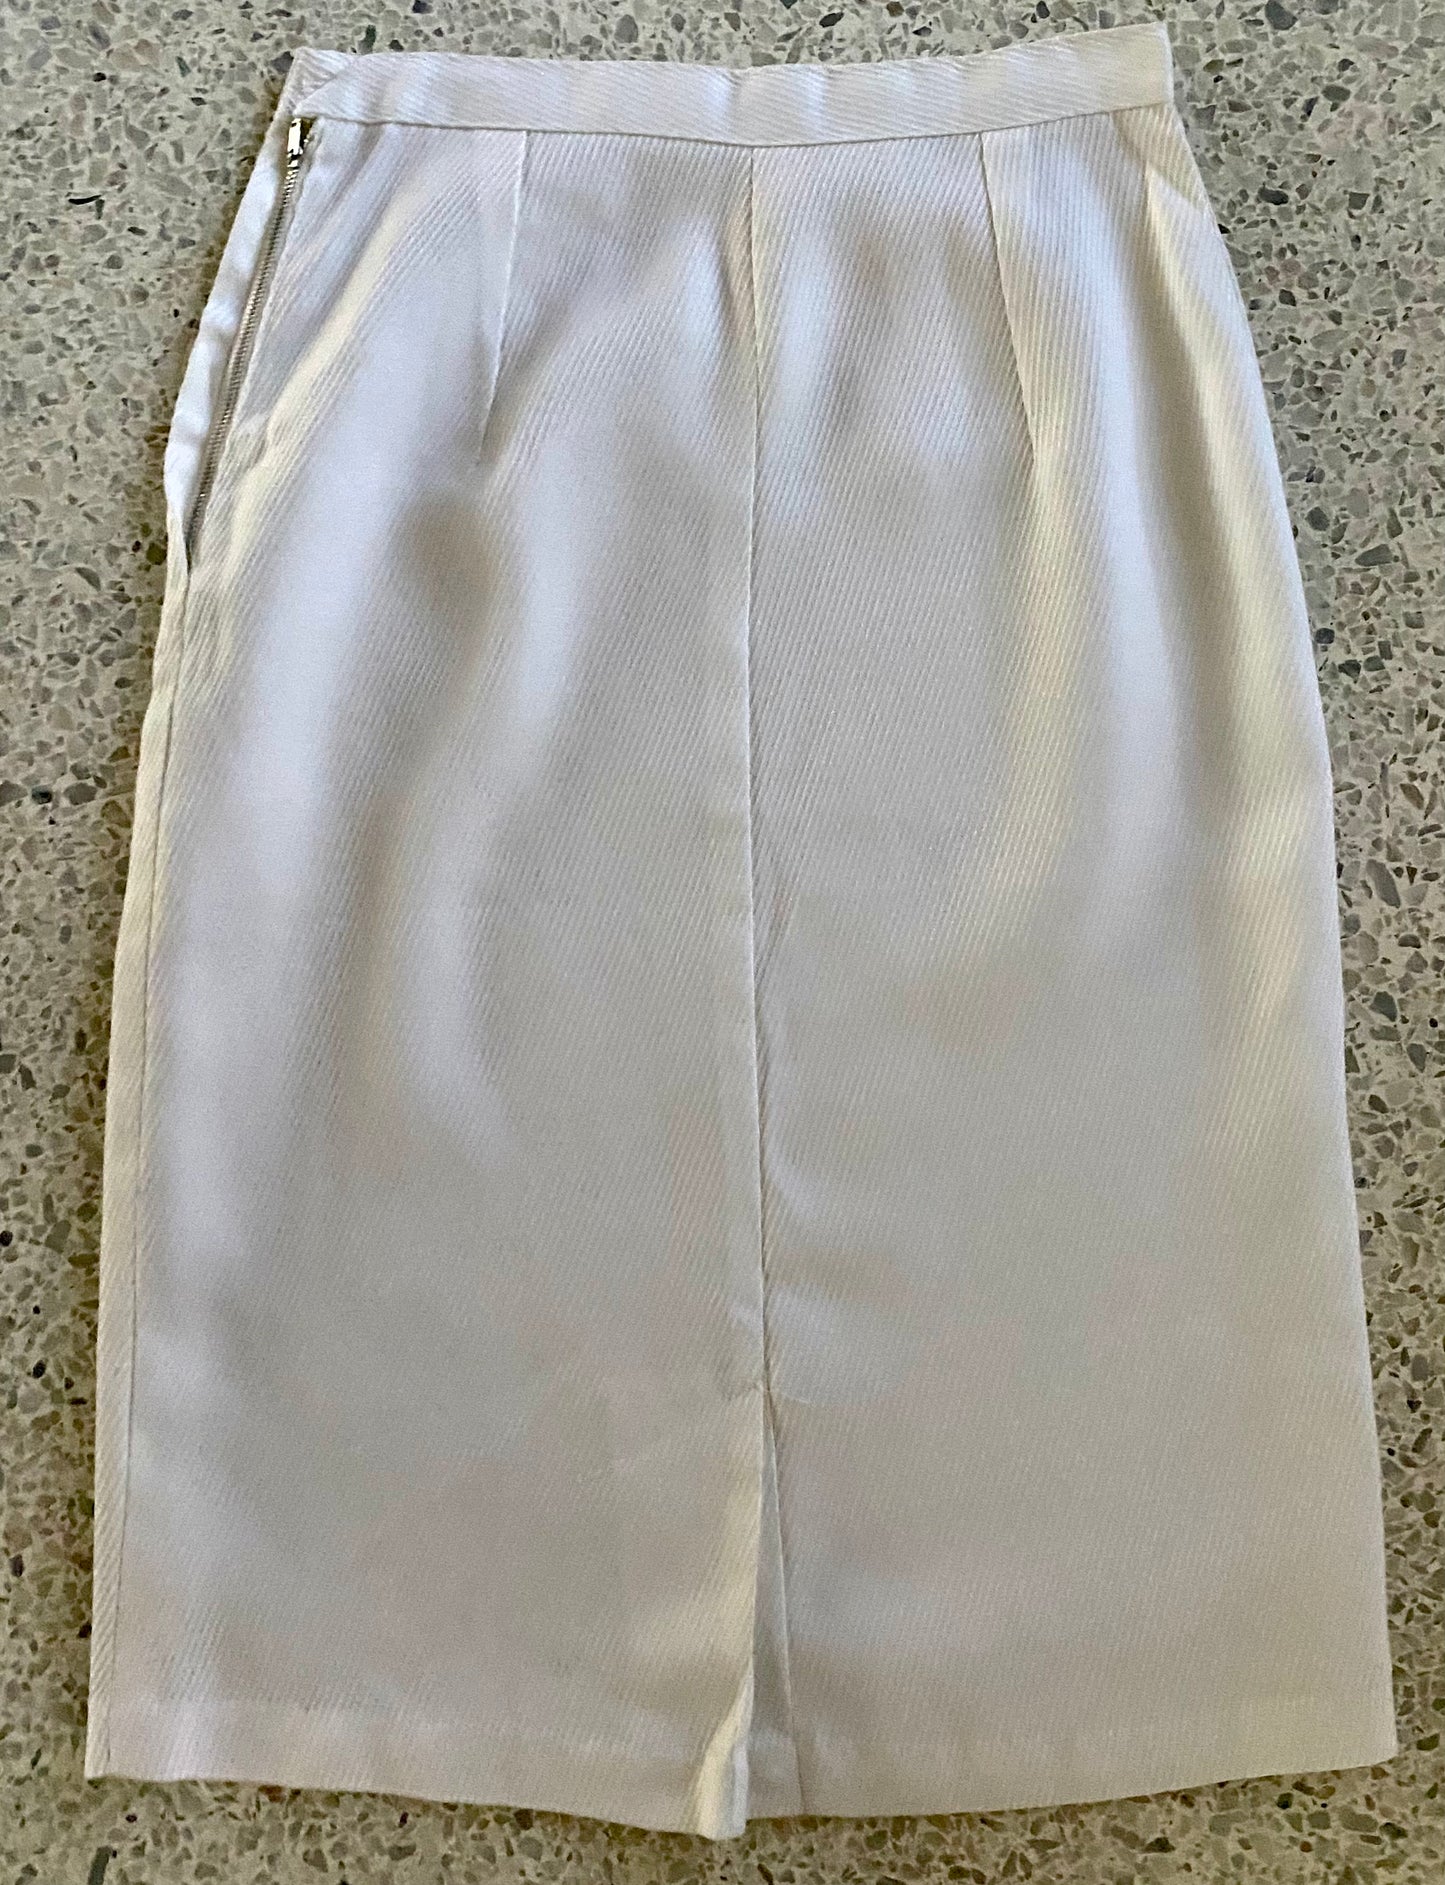 1950s Kick Pleat Skirt With Original Tags